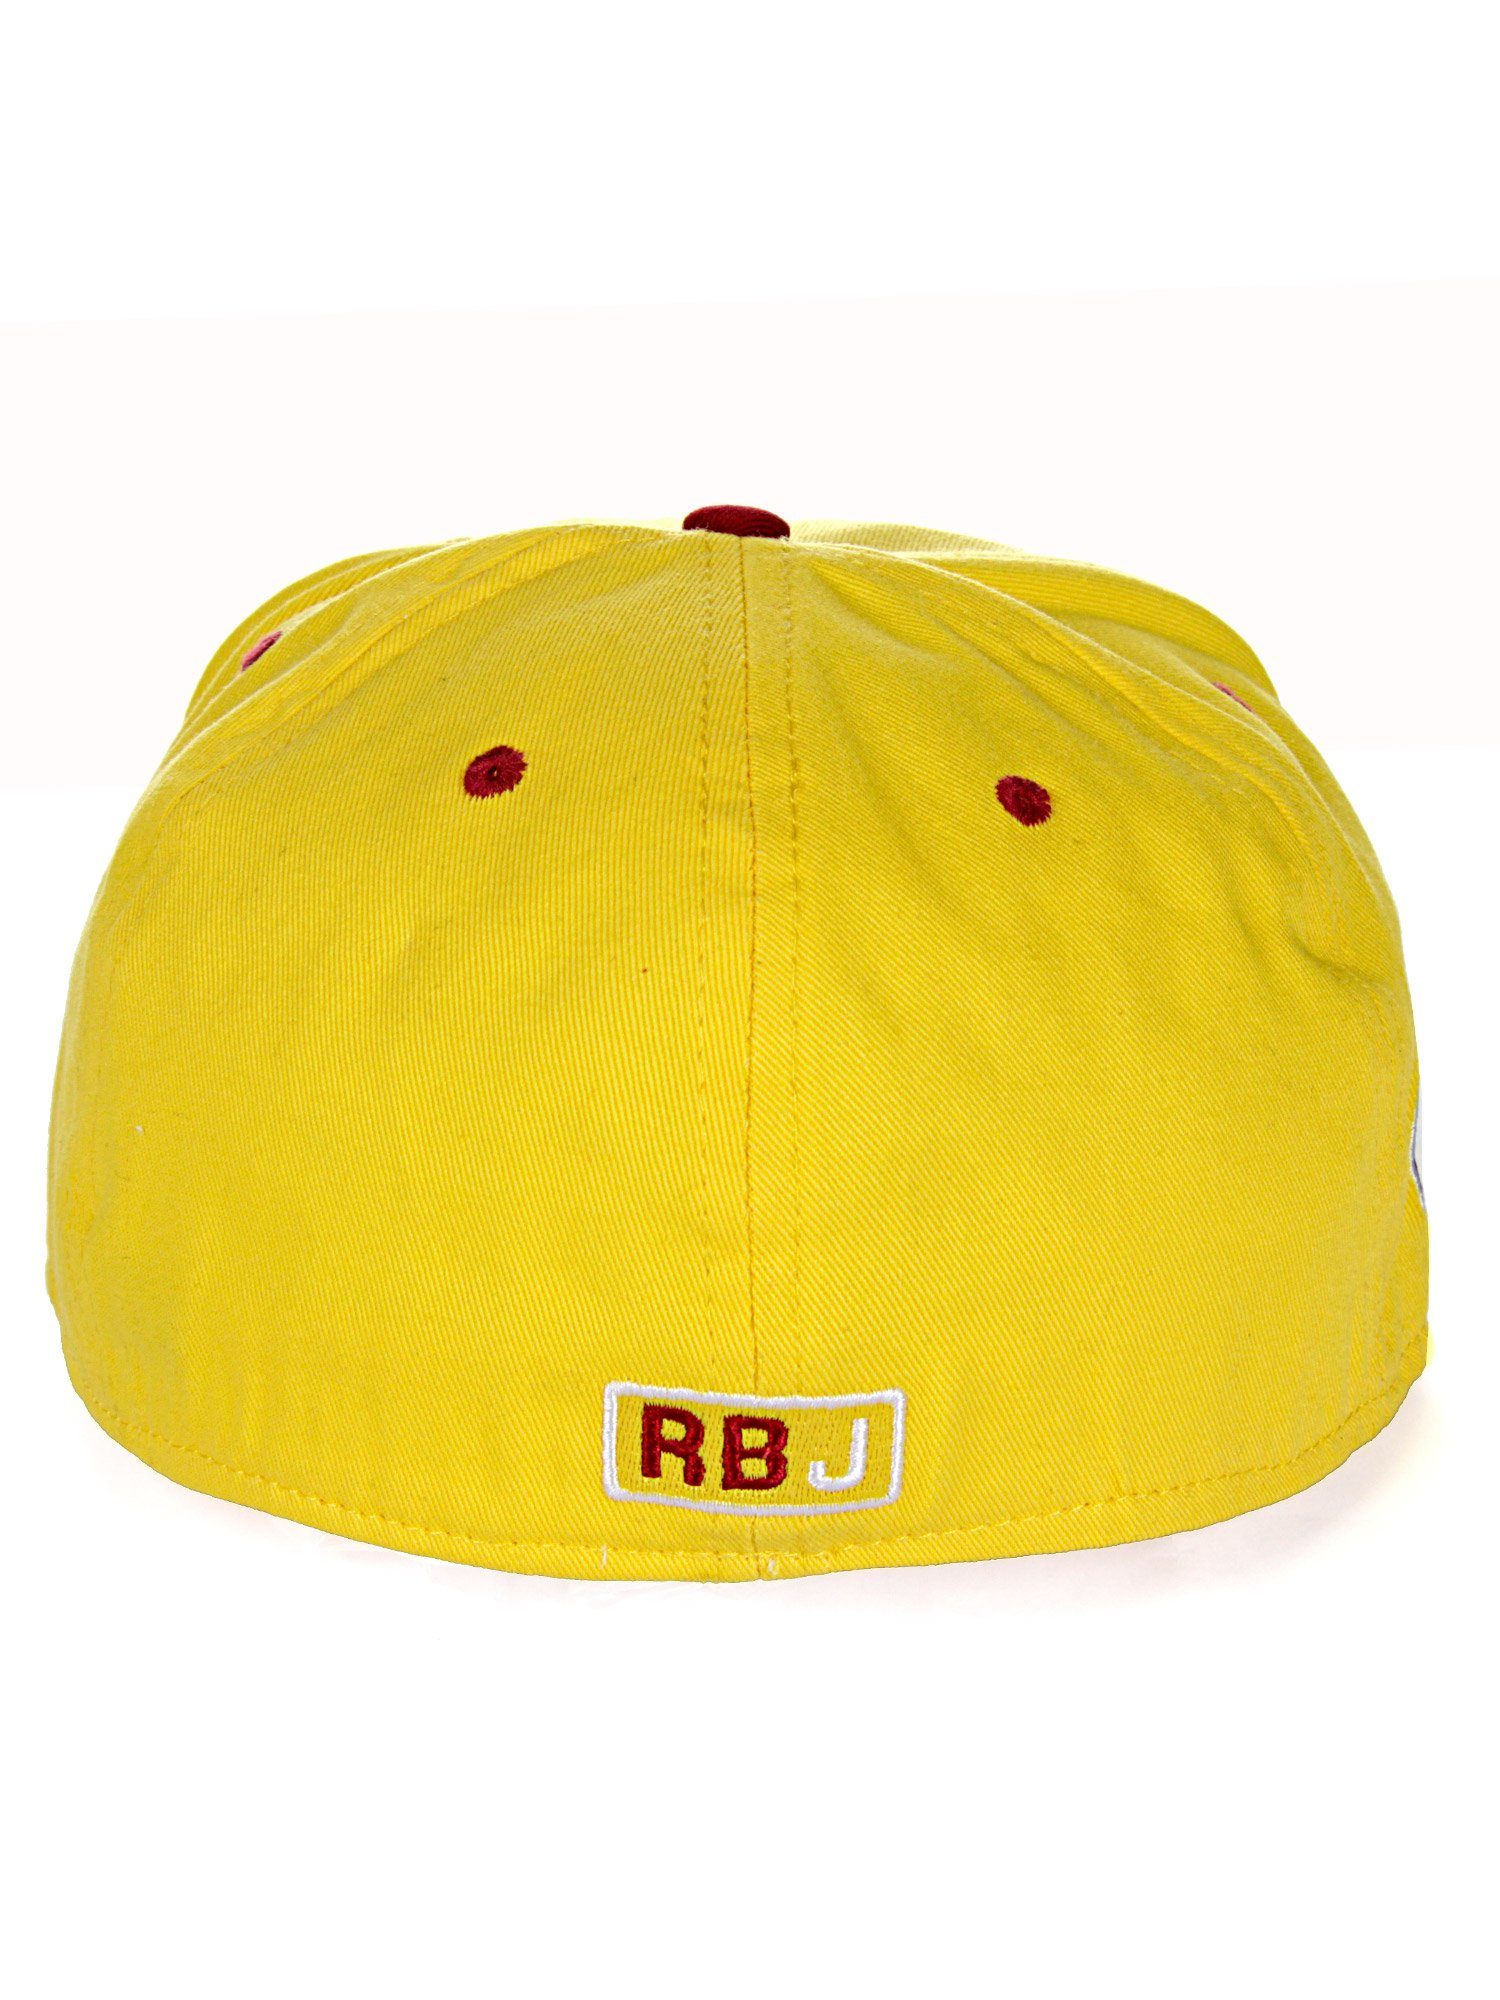 gelb-rot kontrastfarbigem Cap RedBridge Durham Schirm mit Baseball